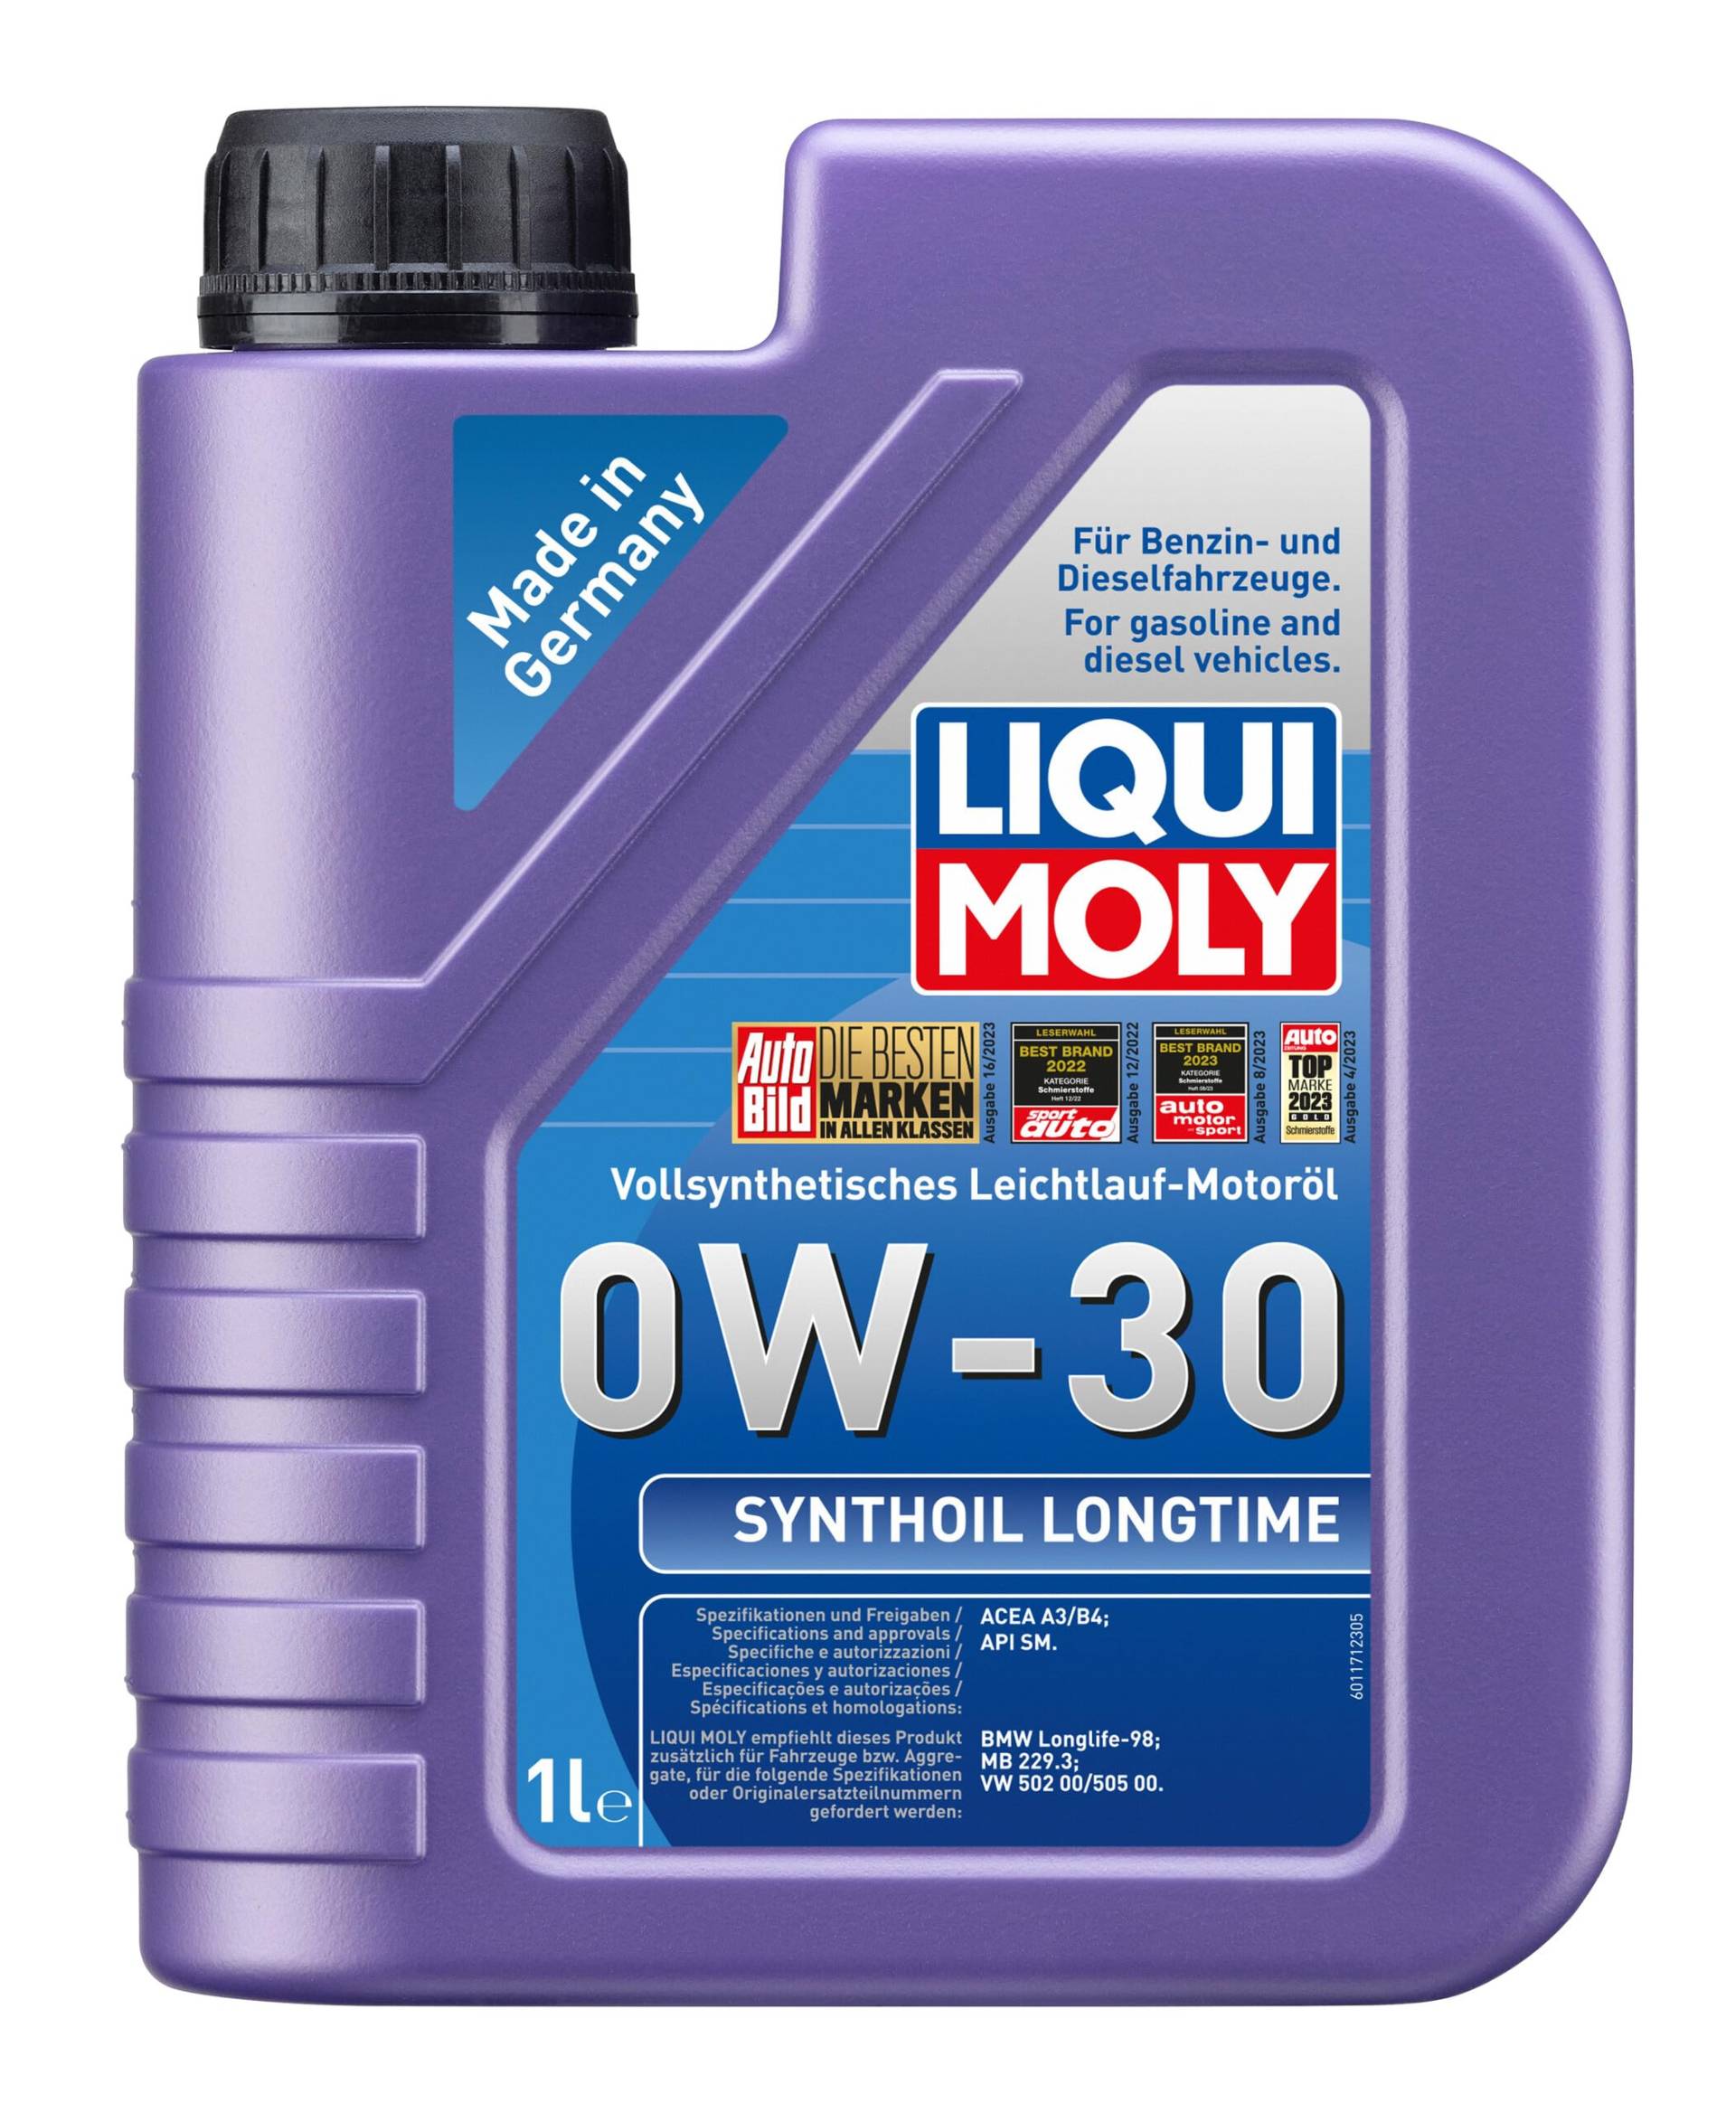 LIQUI MOLY Synthoil Longtime 0W-30 | 1 L | vollsynthetisches Motoröl | Art.-Nr.: 1171 von Liqui Moly